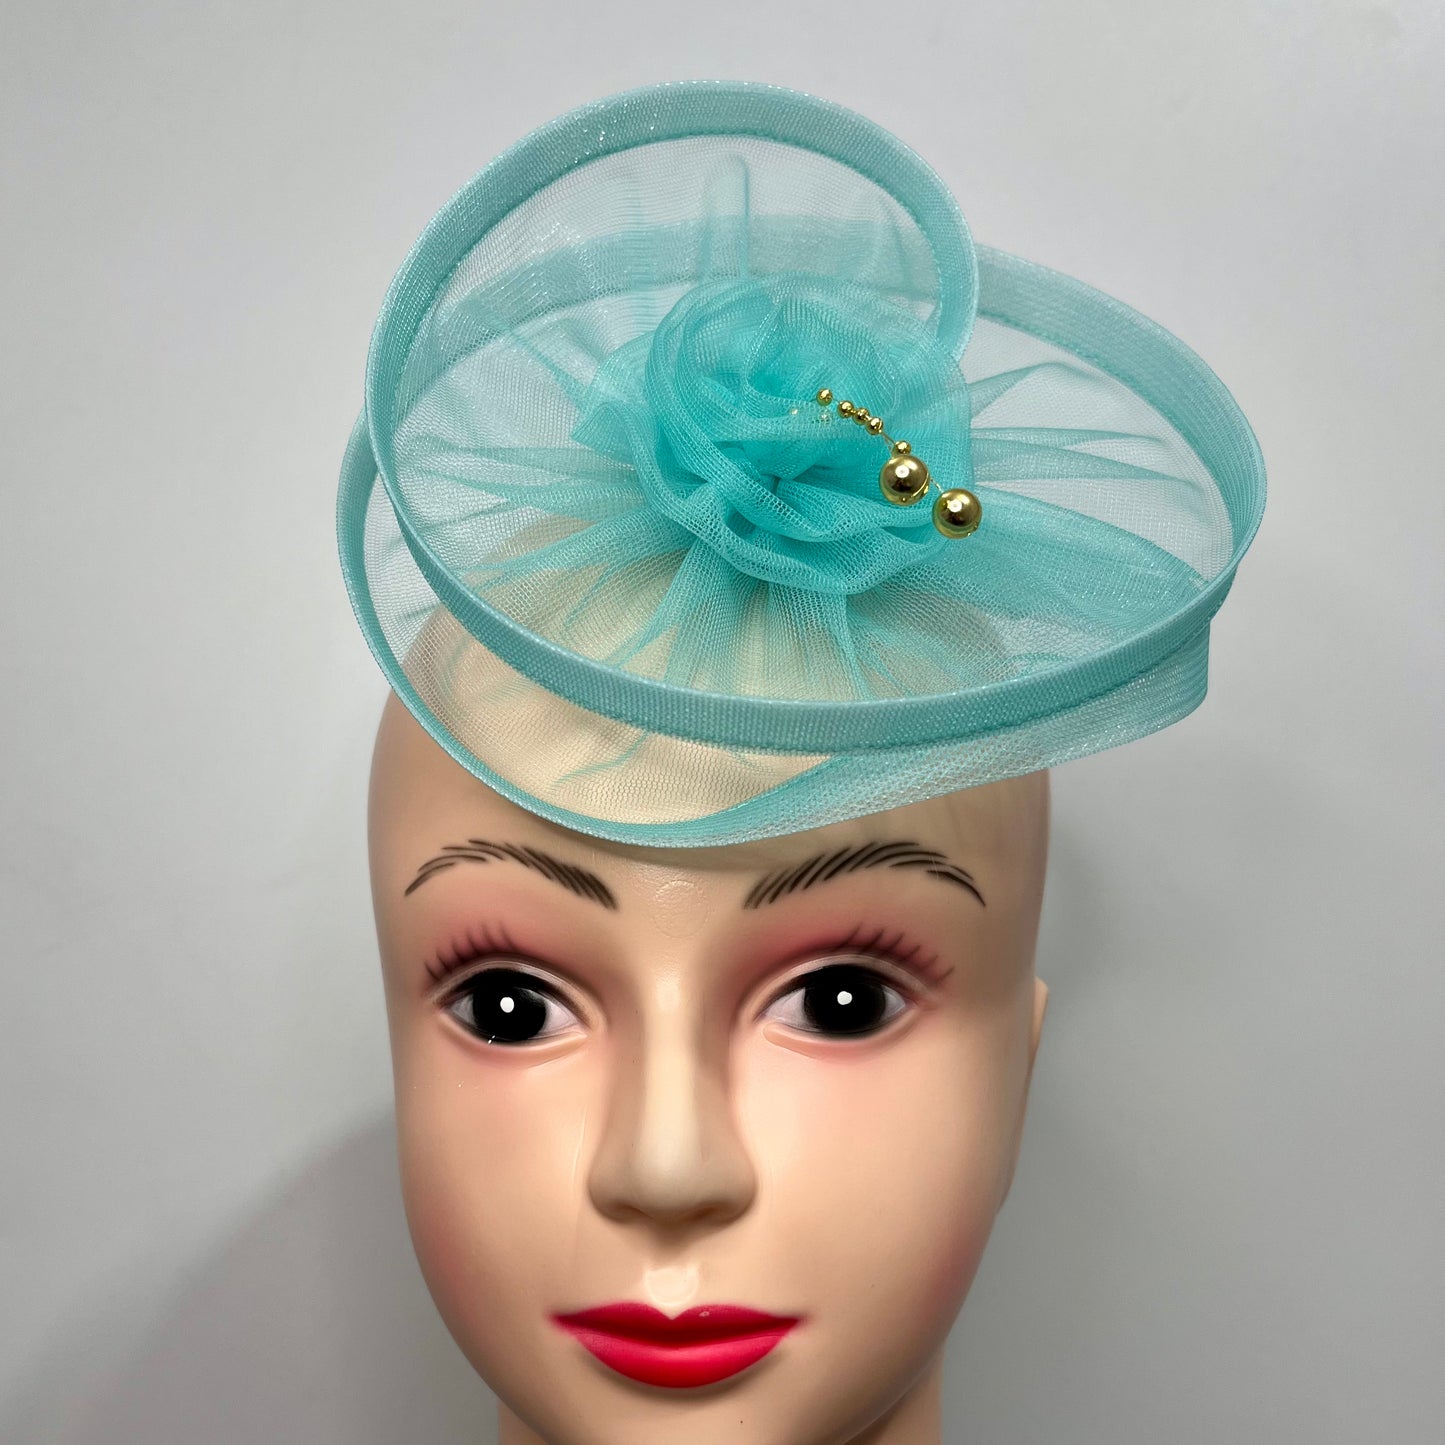 Pastel Turquoise Blue Fascinator Hat | Designer Headpiece